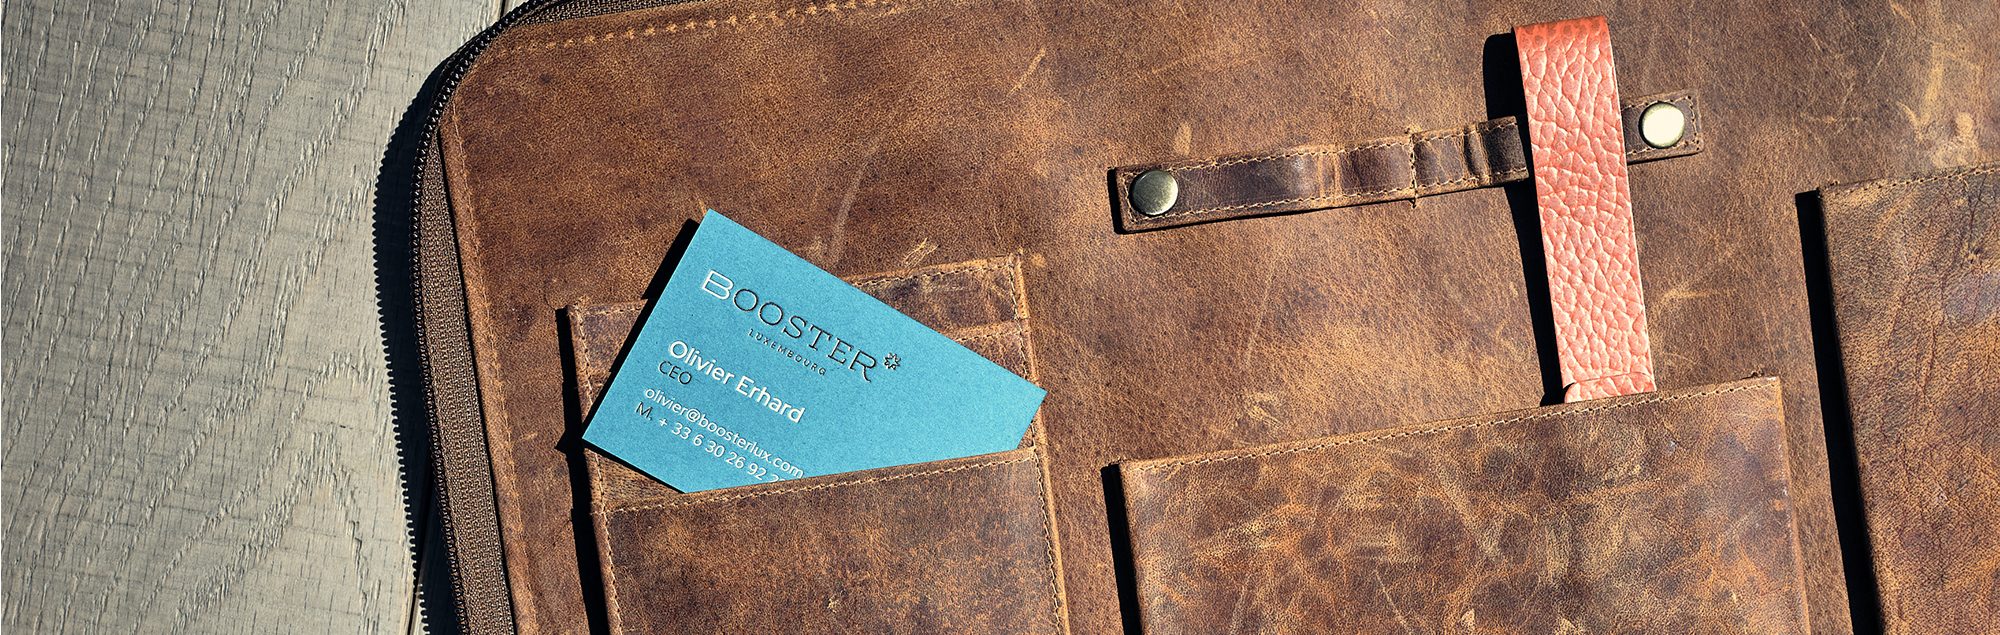 Booster - partenaire distributeur Booster Bijoux Booster Deco